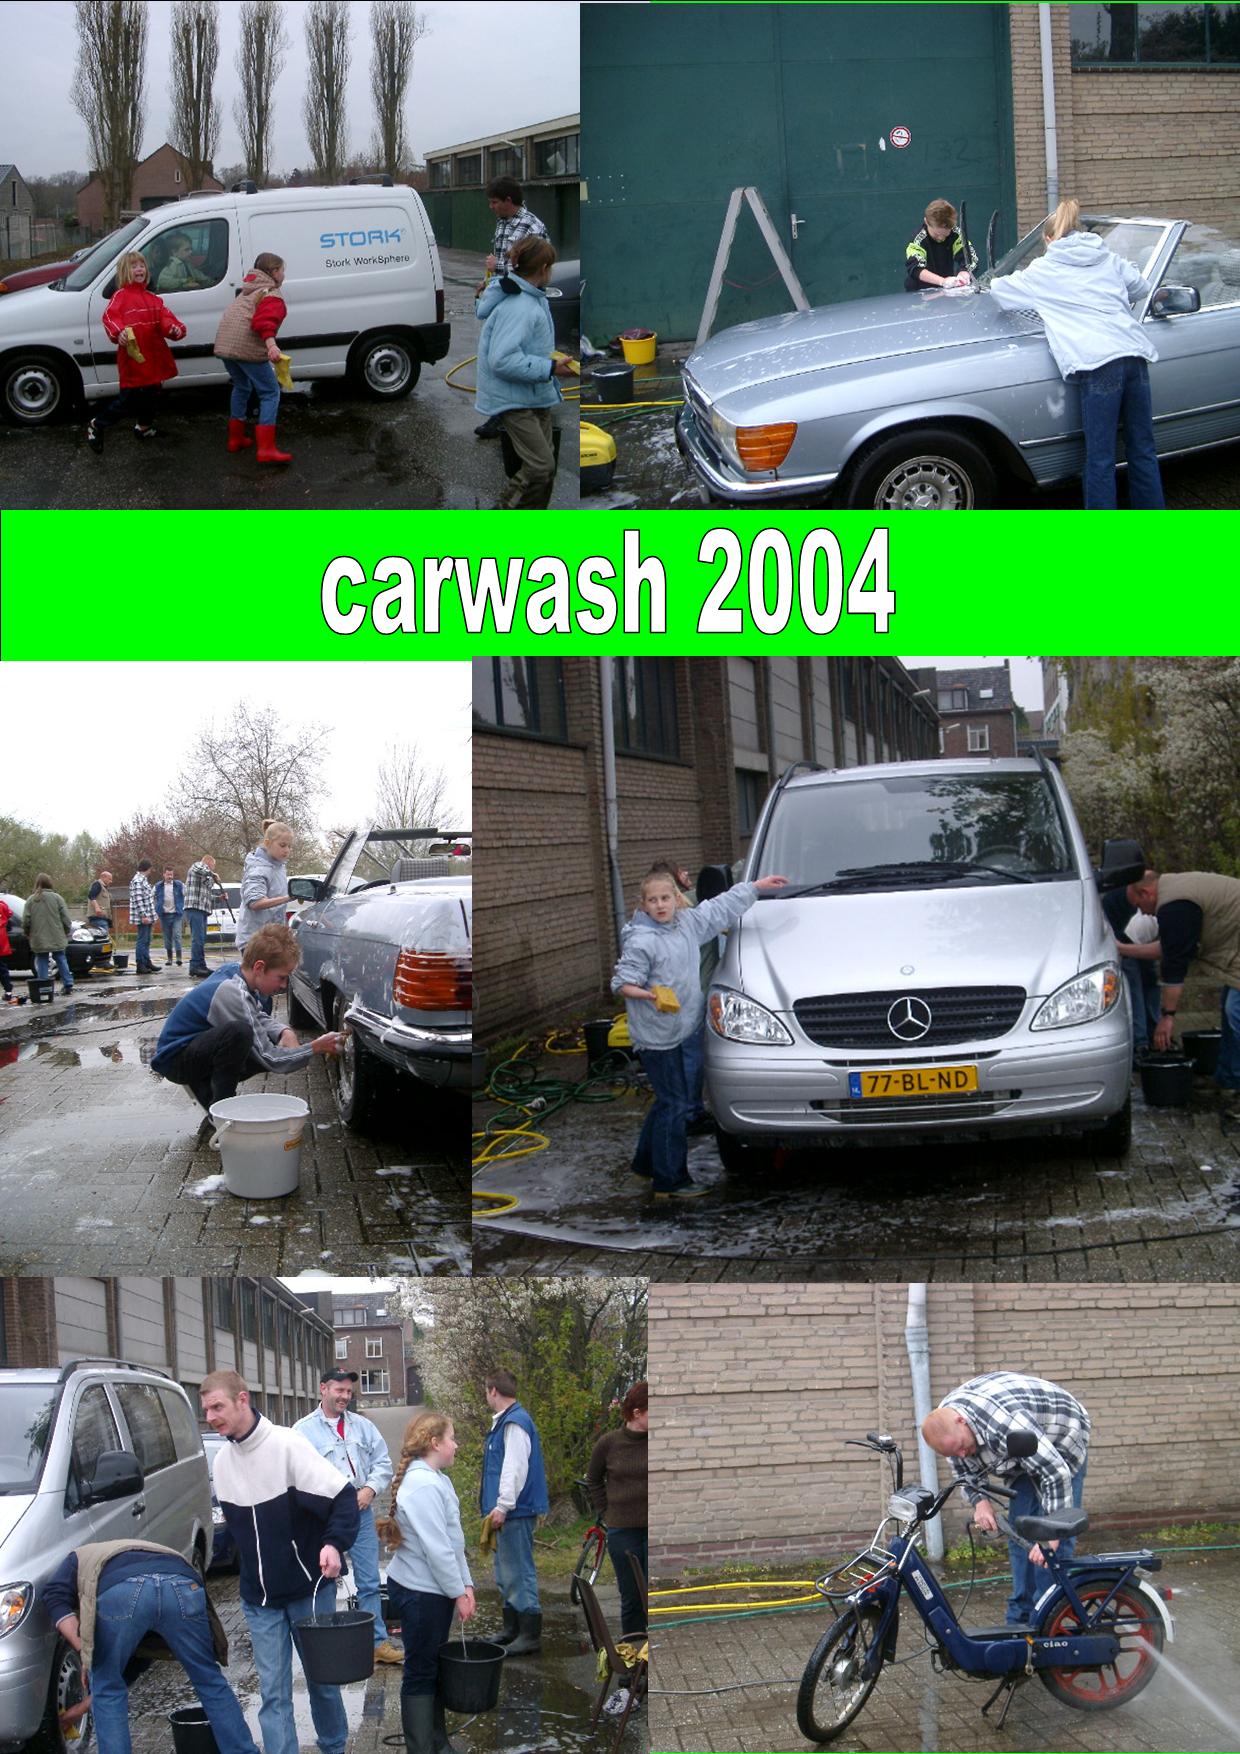 carwasch 2004 met dank aan Arno R.